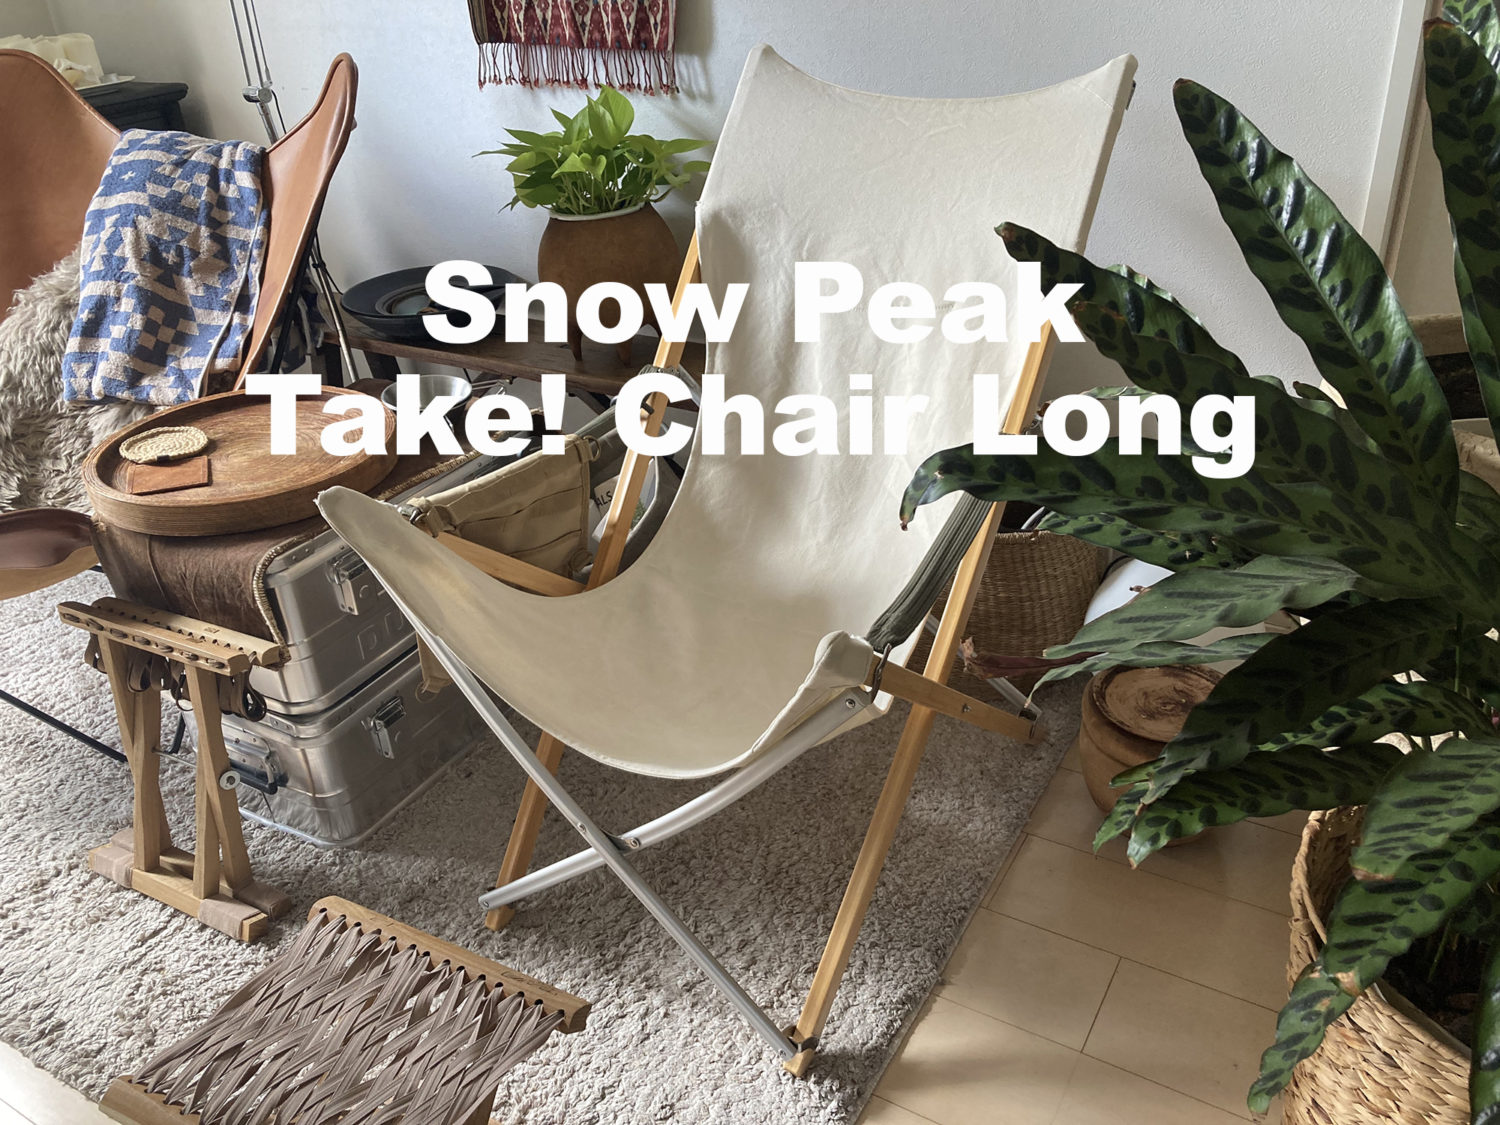 snow peak スノーピーク Take!チェア ロング - テーブル・チェア 